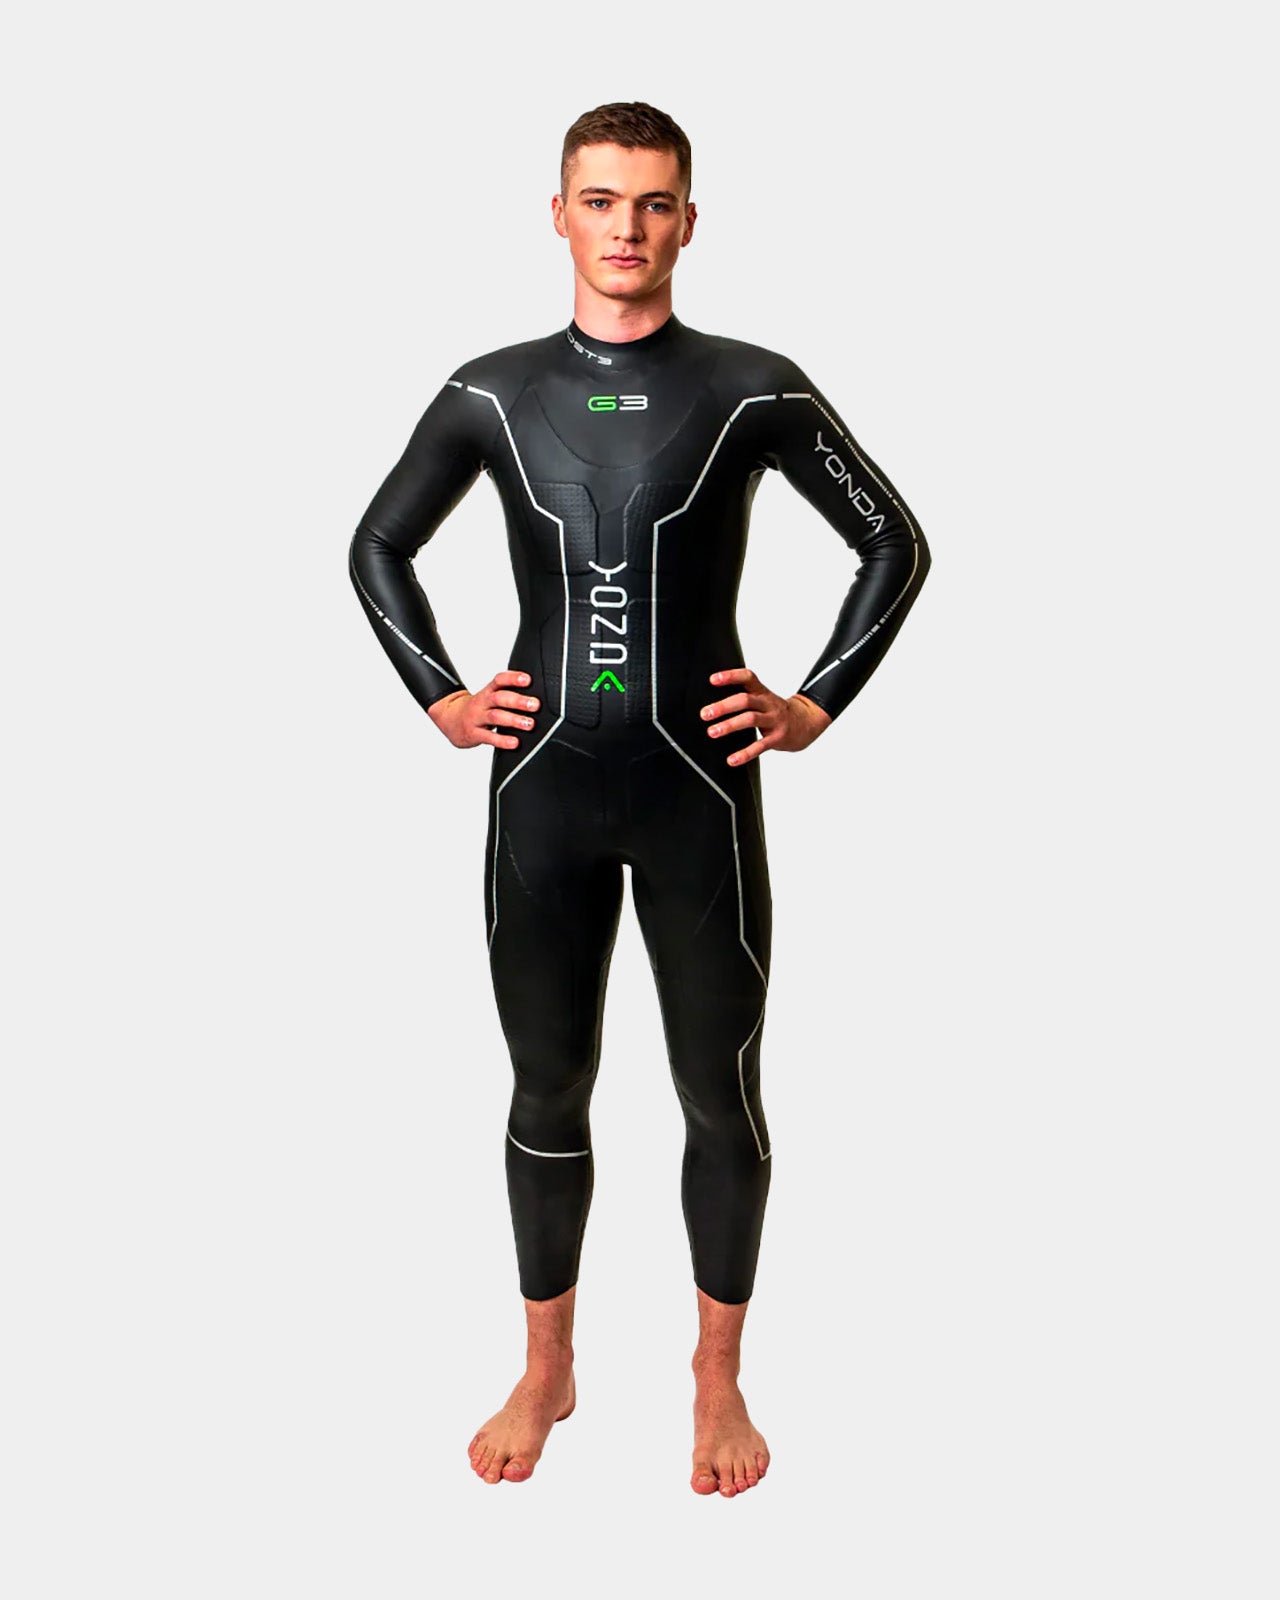 YONDA Ghost 3 Men's Triathlon & Swimming Wetsuit